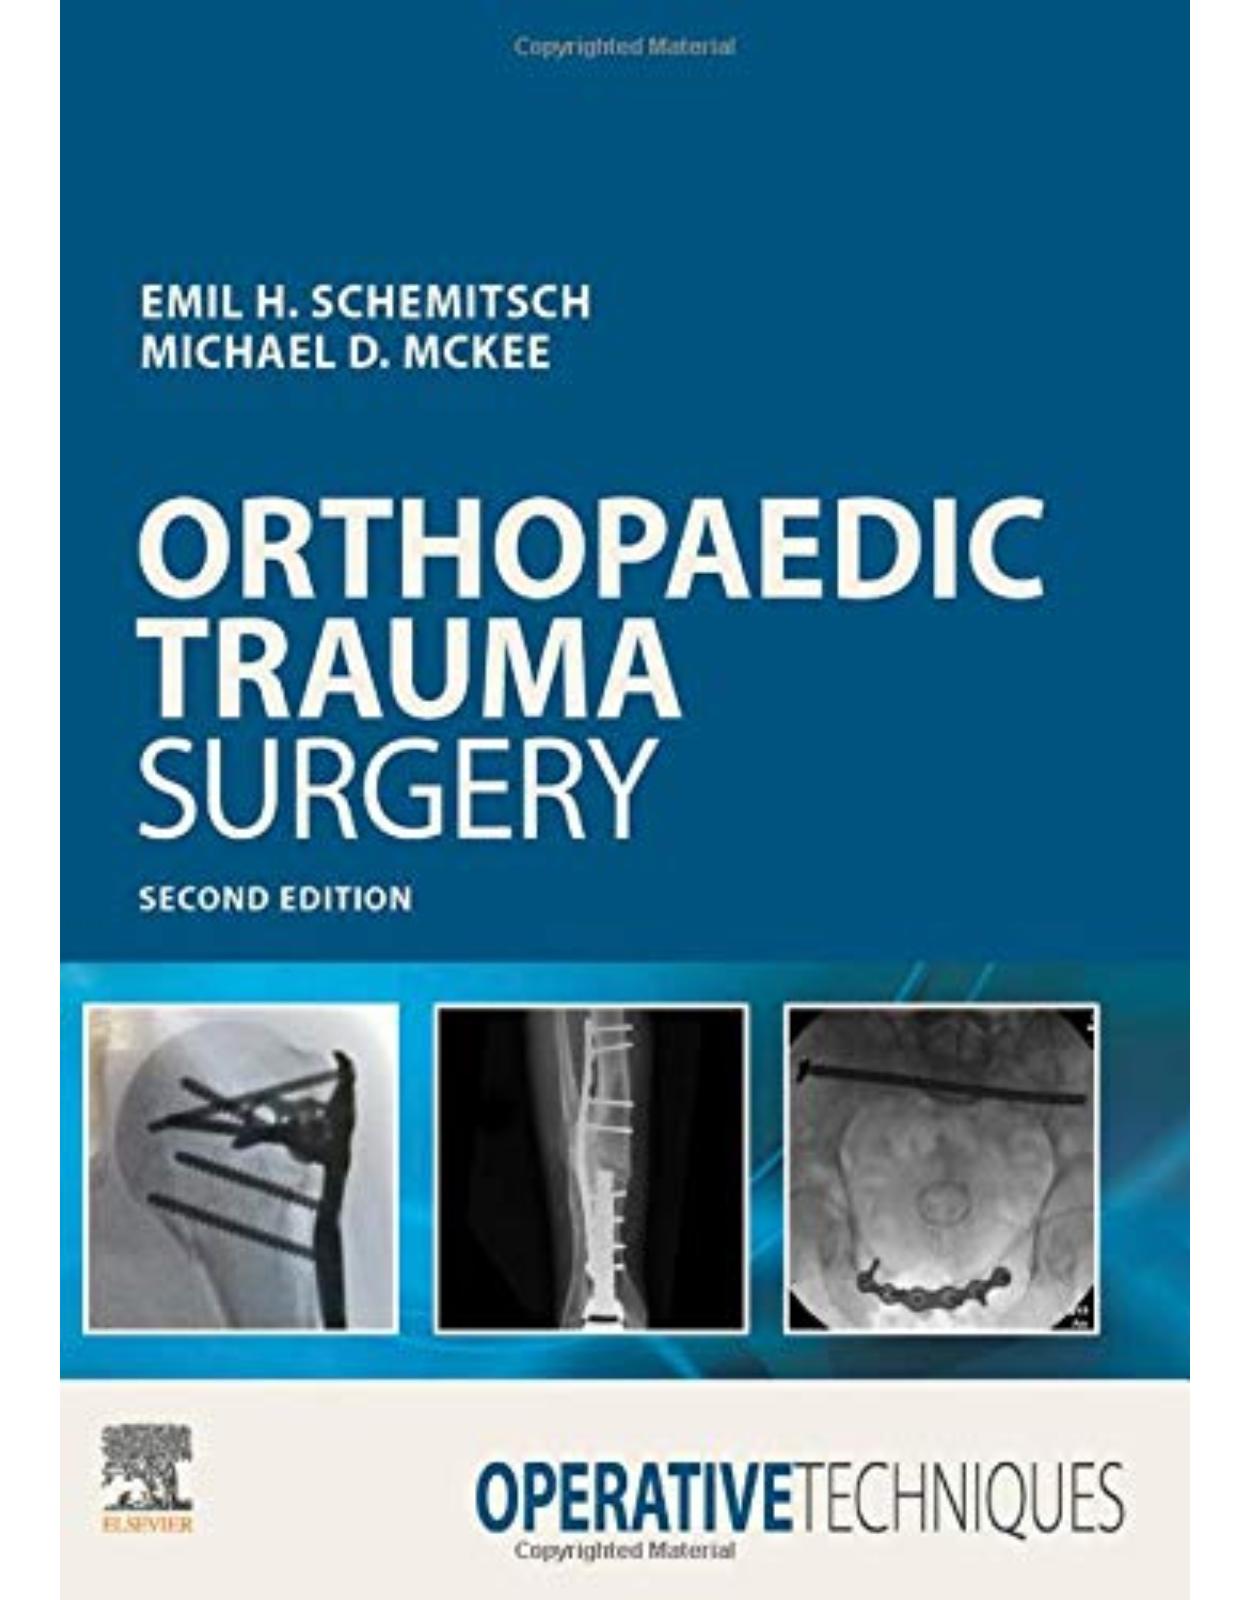 Operative Techniques: Orthopaedic Trauma Surgery, 2nd Edition 